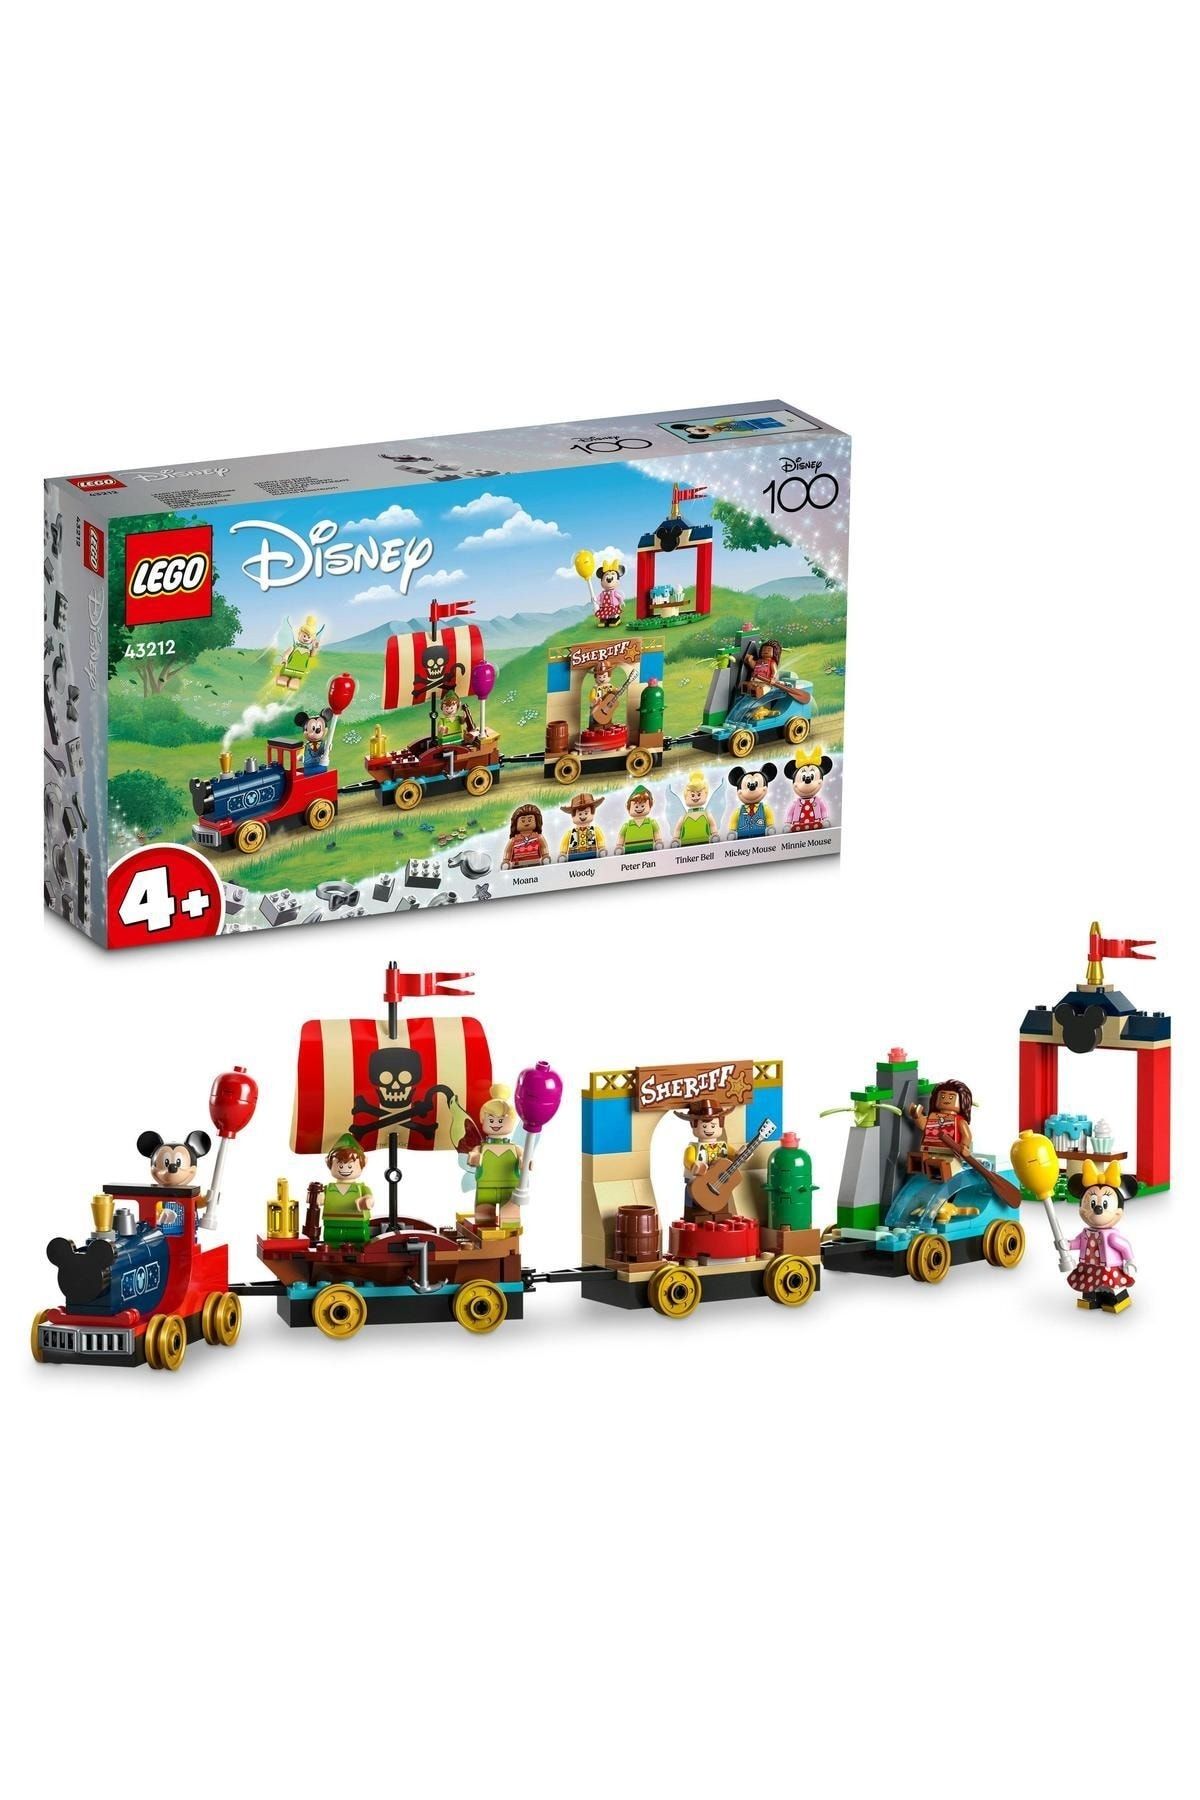 LEGO ® Disney: Disney Celebration Train 43212 Toy Building Set (200 Pieces)